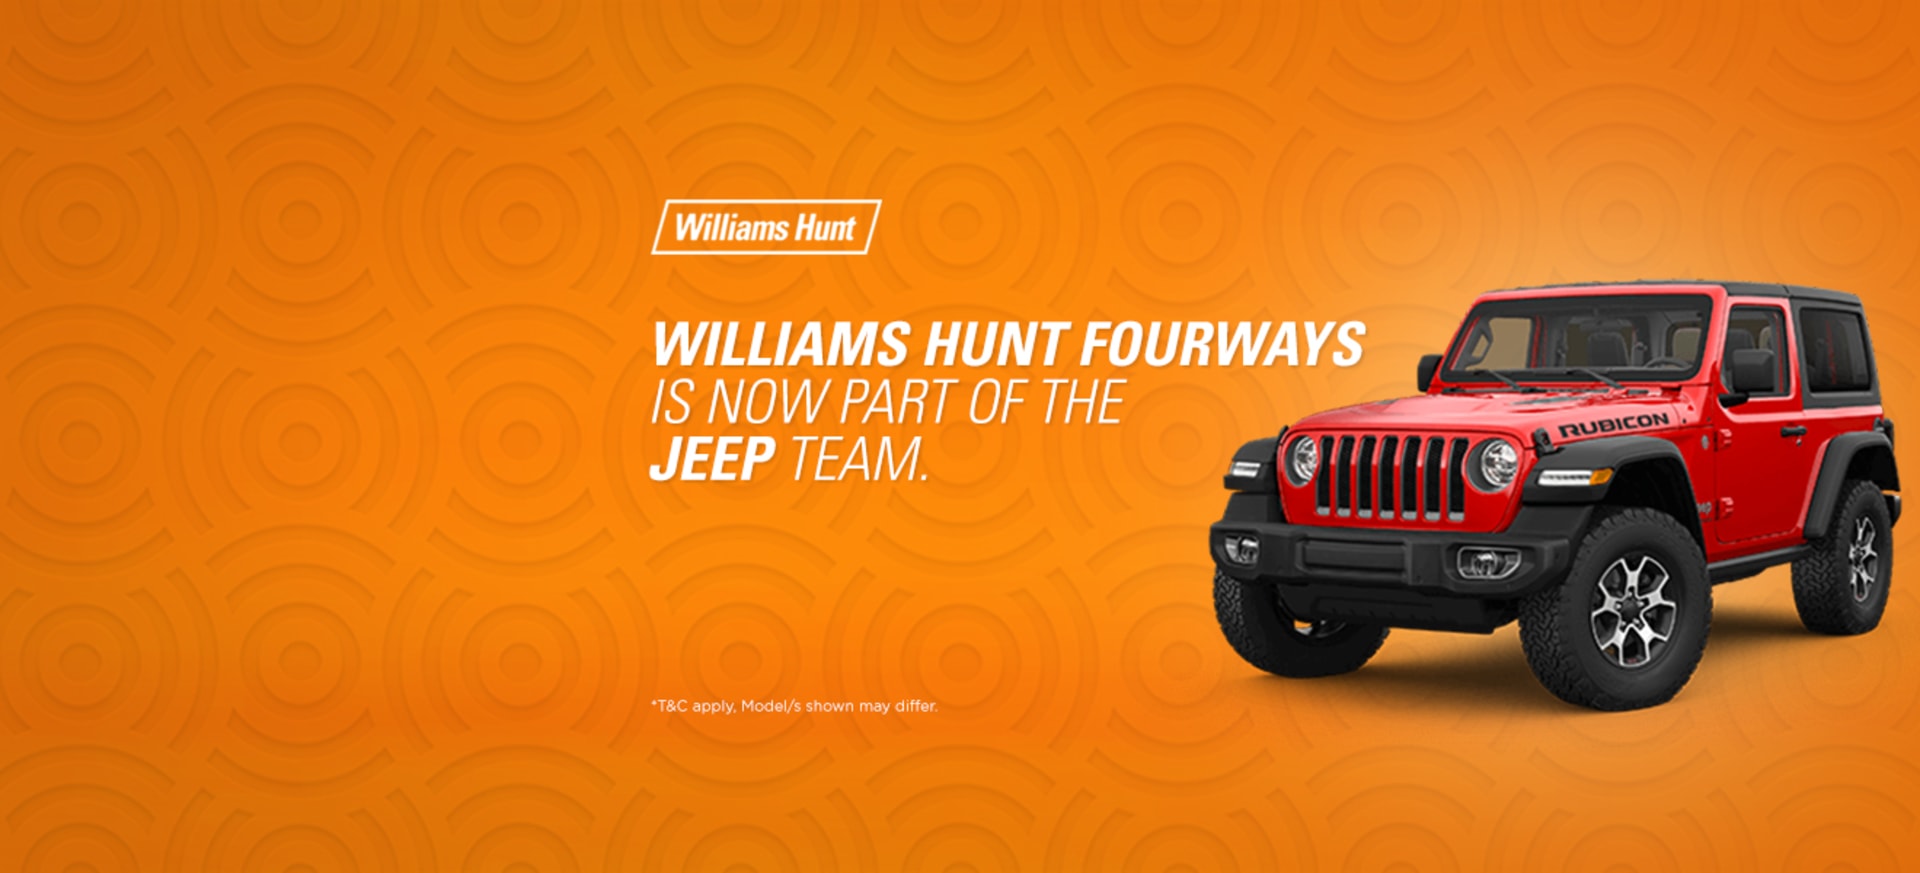 Williams Hunt Fourways Jeep Franchise